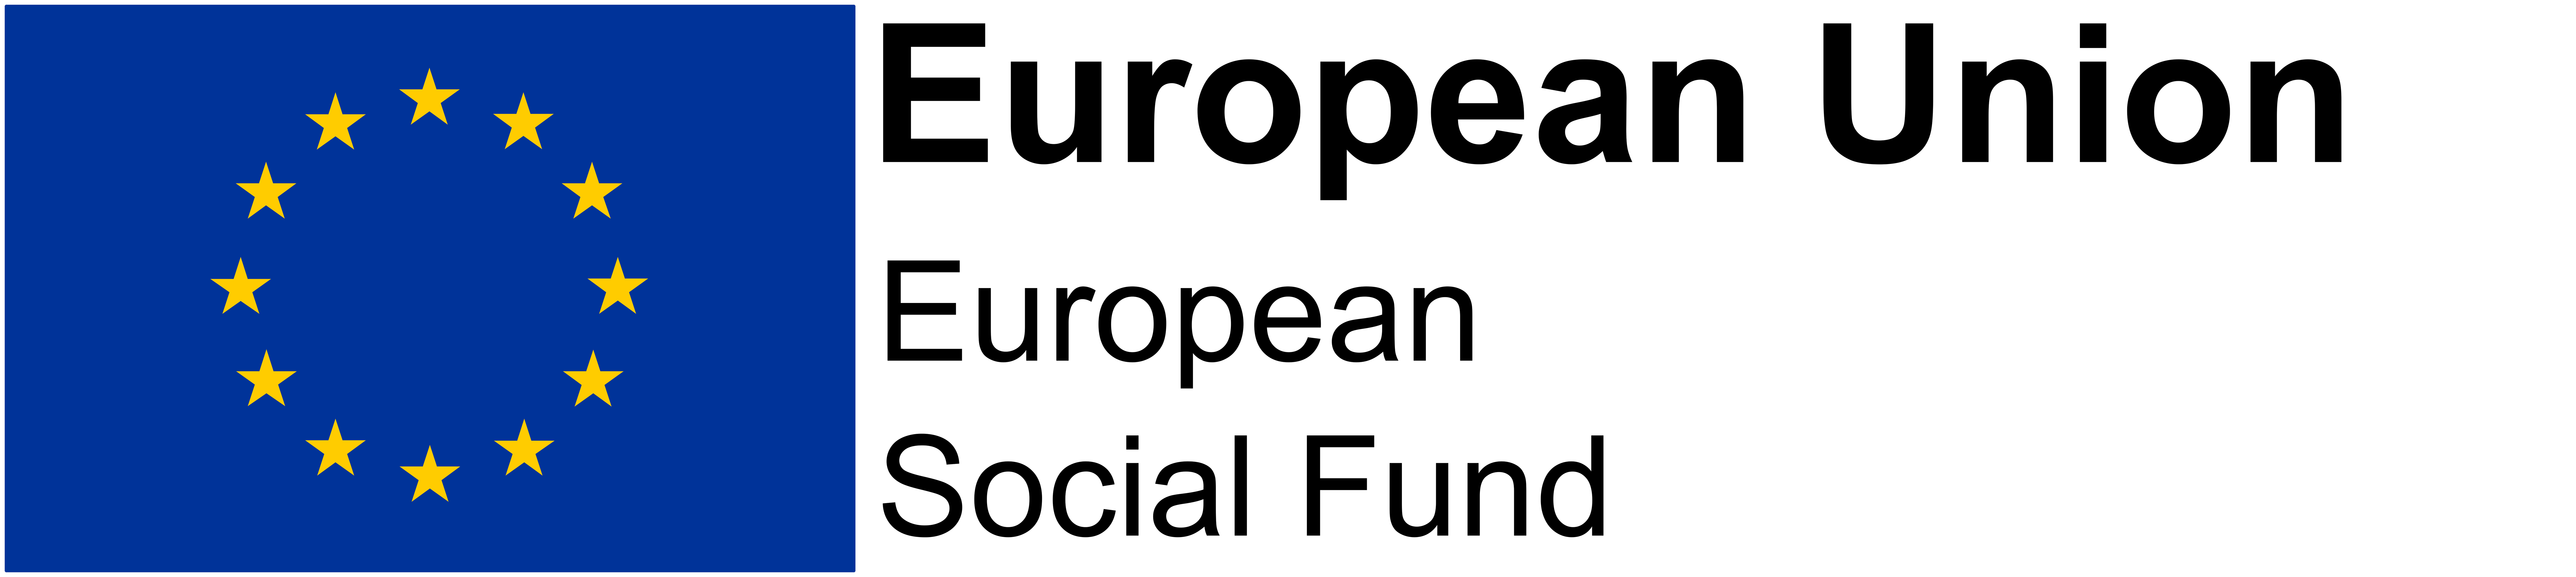 European Social Fund emblem and logo